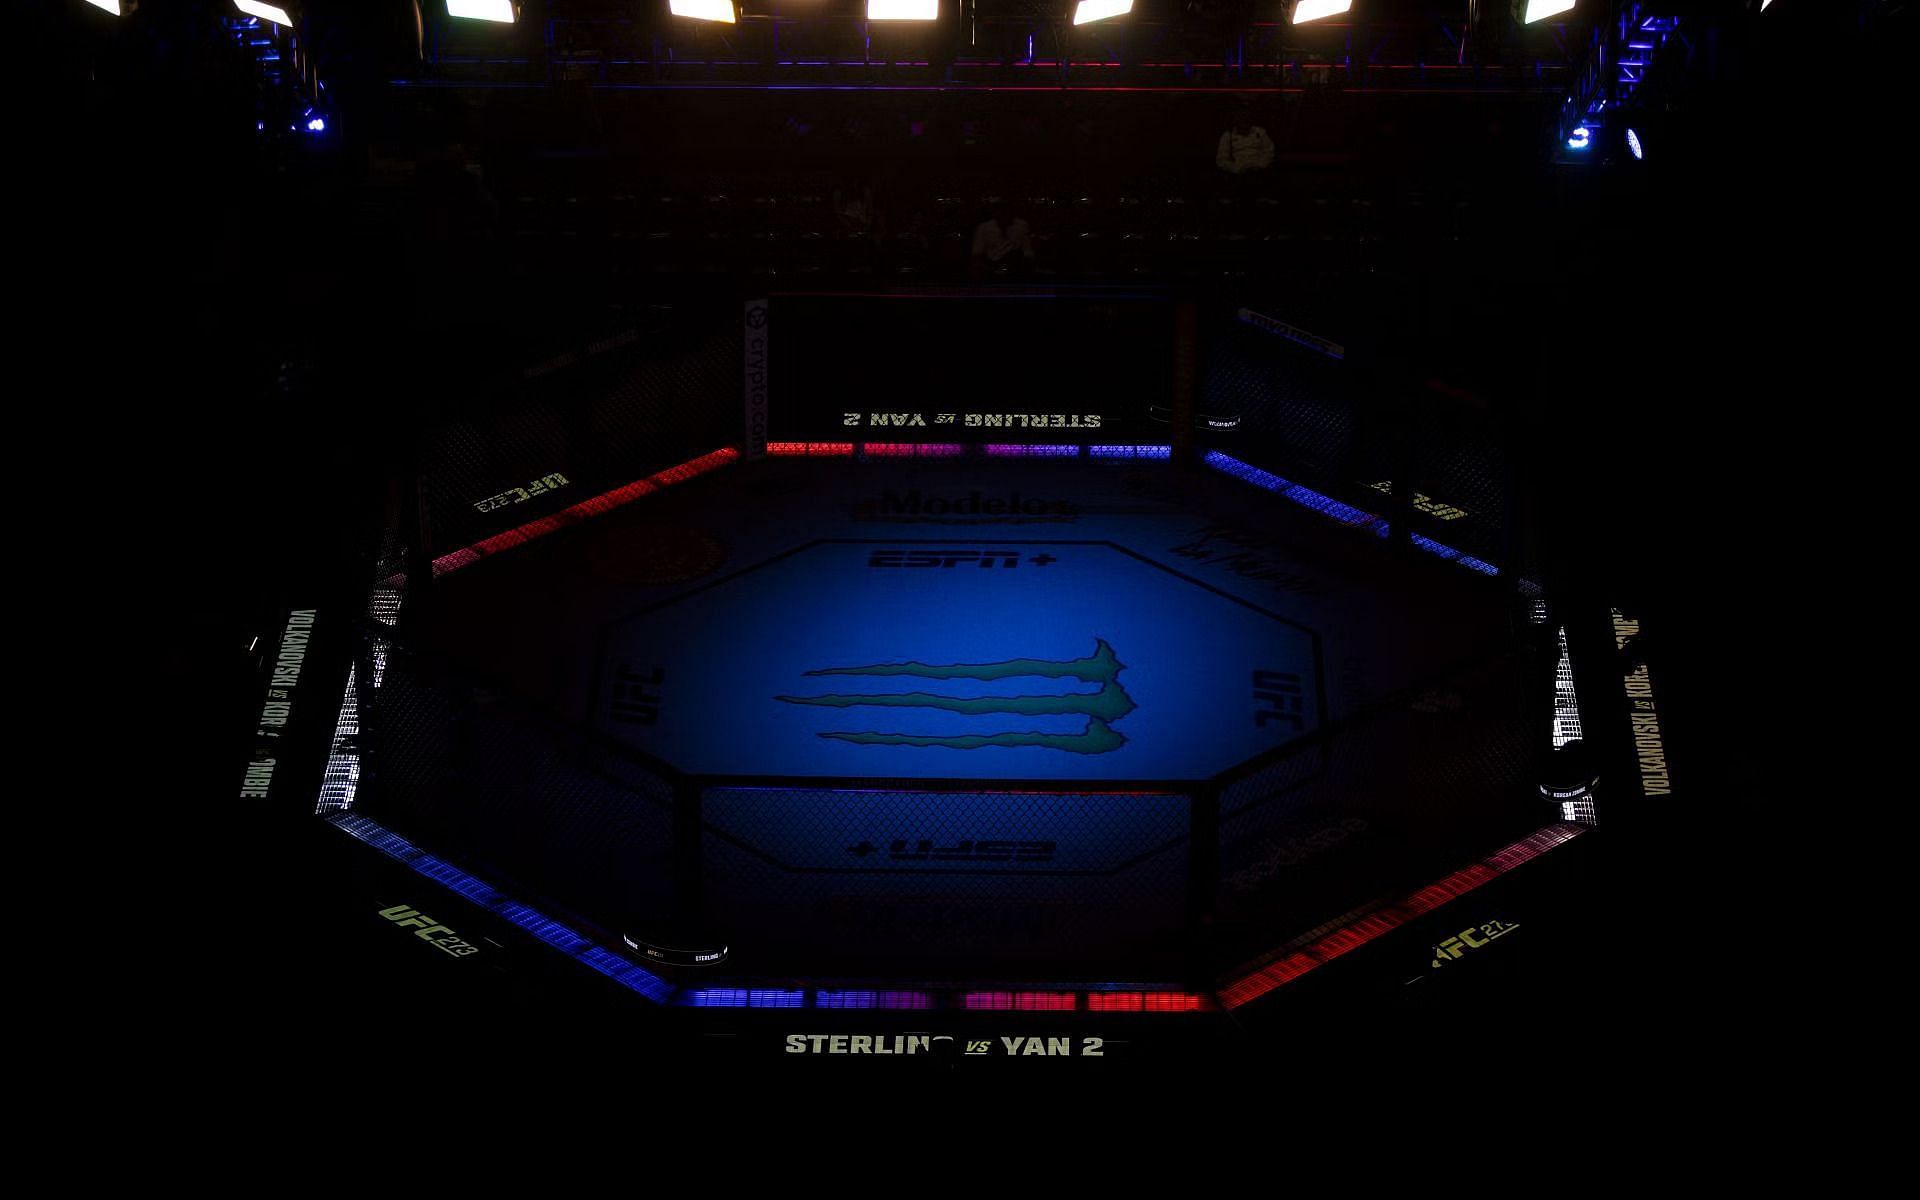 UFC 273: Alexander Volkanovski vs The Korean Zombie